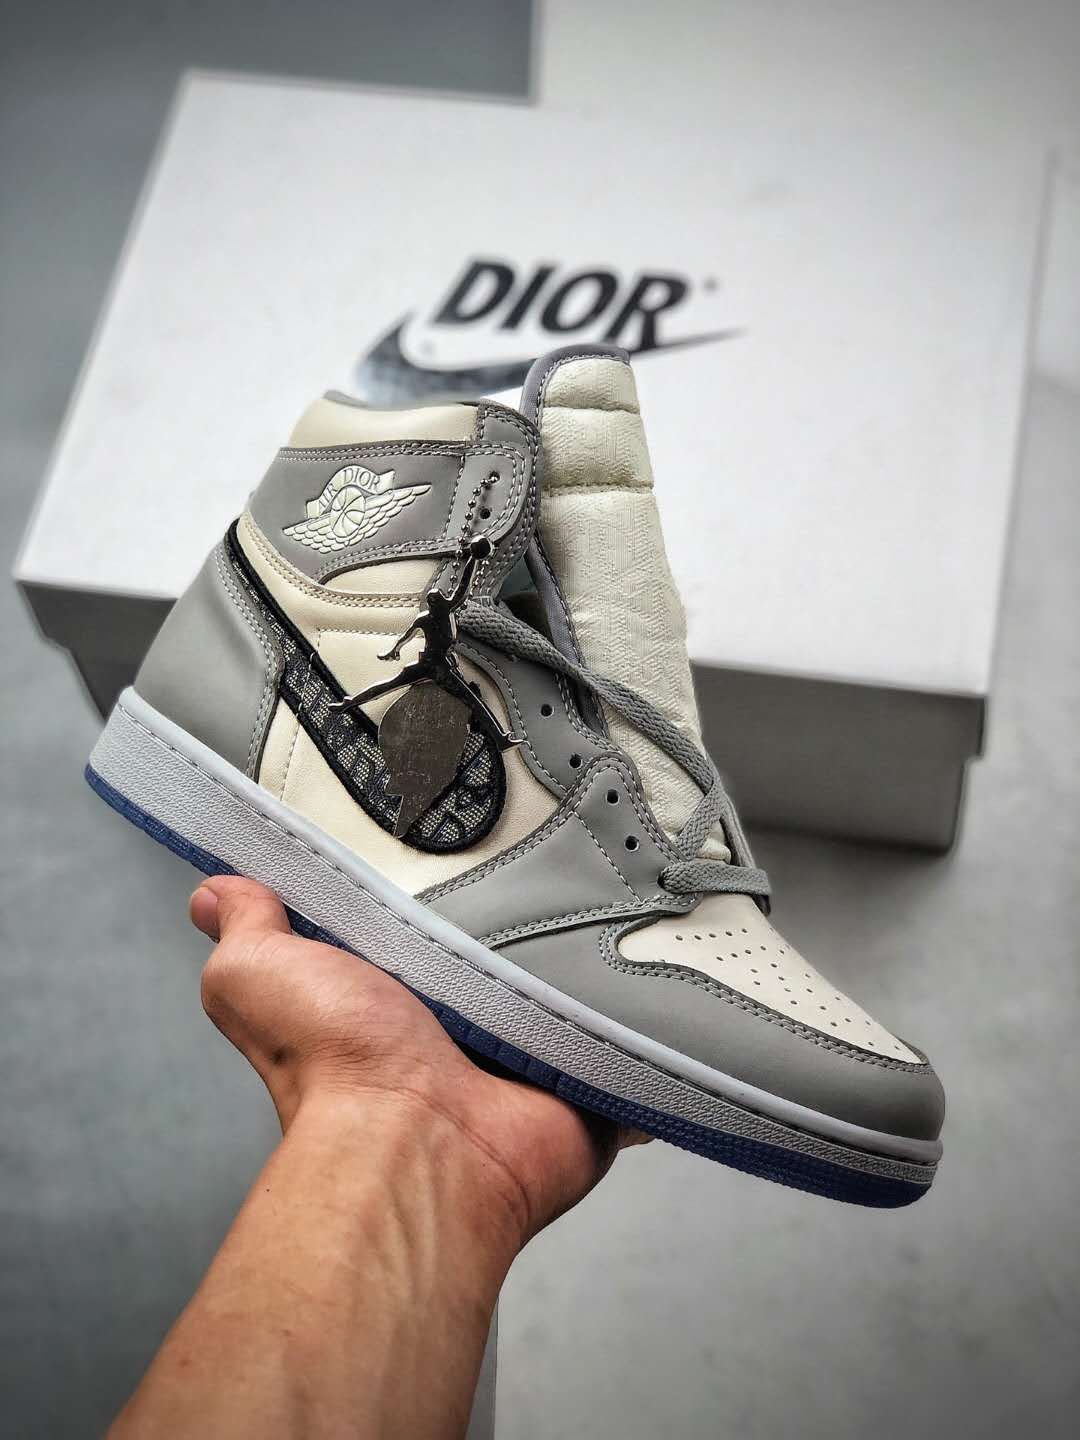 Nike Dior x Air Jordan 1 High OG Grey - Limited Edition Collaboration!